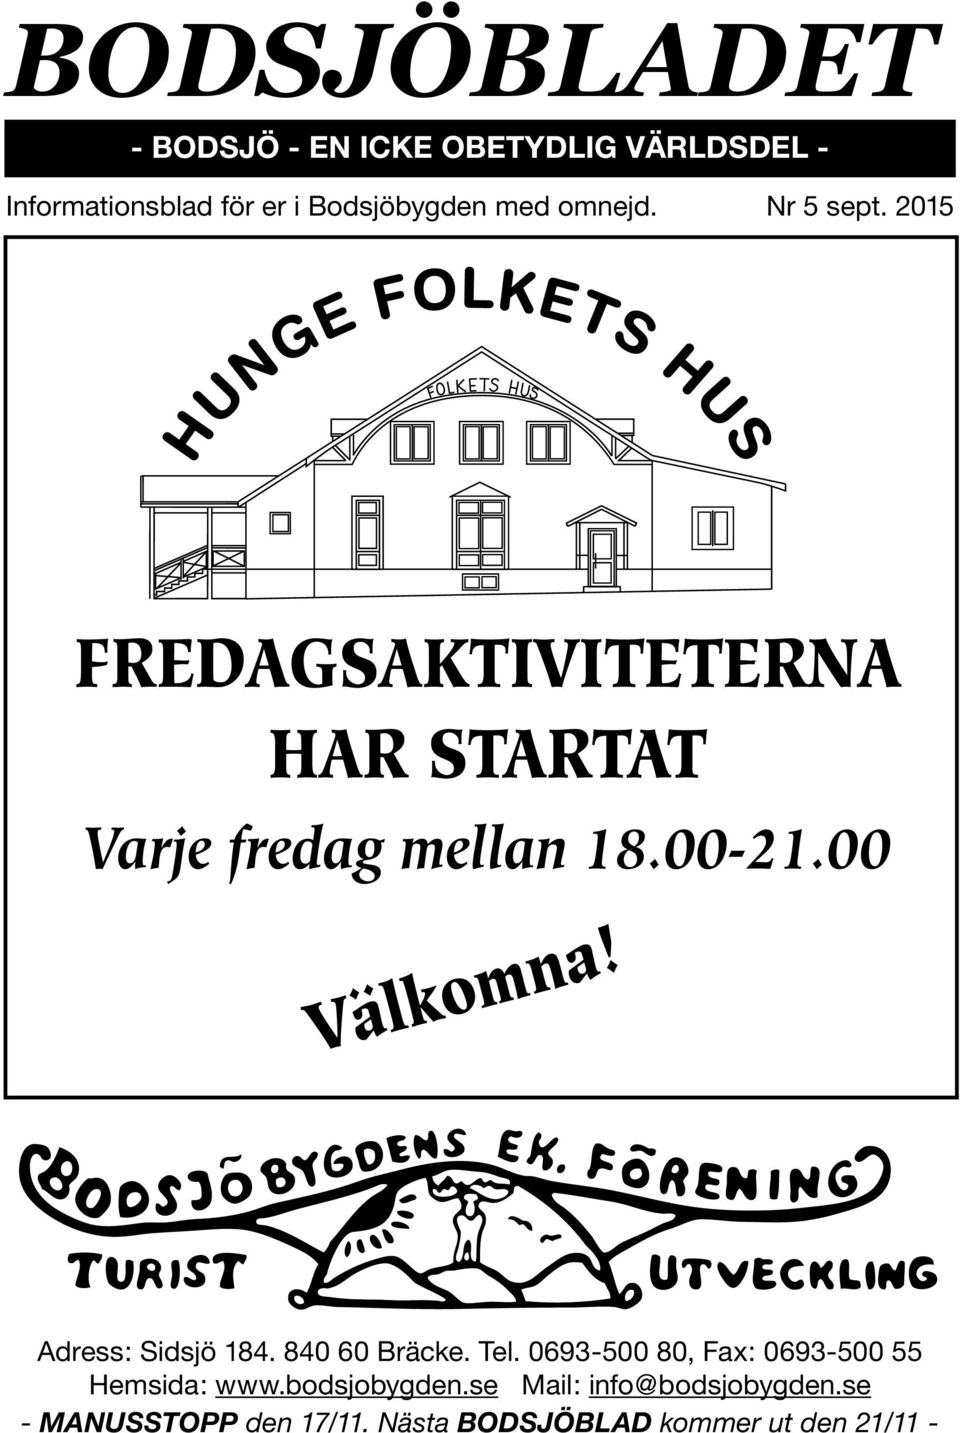 00 Välkomna! Adress: Sidsjö 184. 840 60 Bräcke. Tel. 0693-500 80, Fax: 0693-500 55 Hemsida: www.